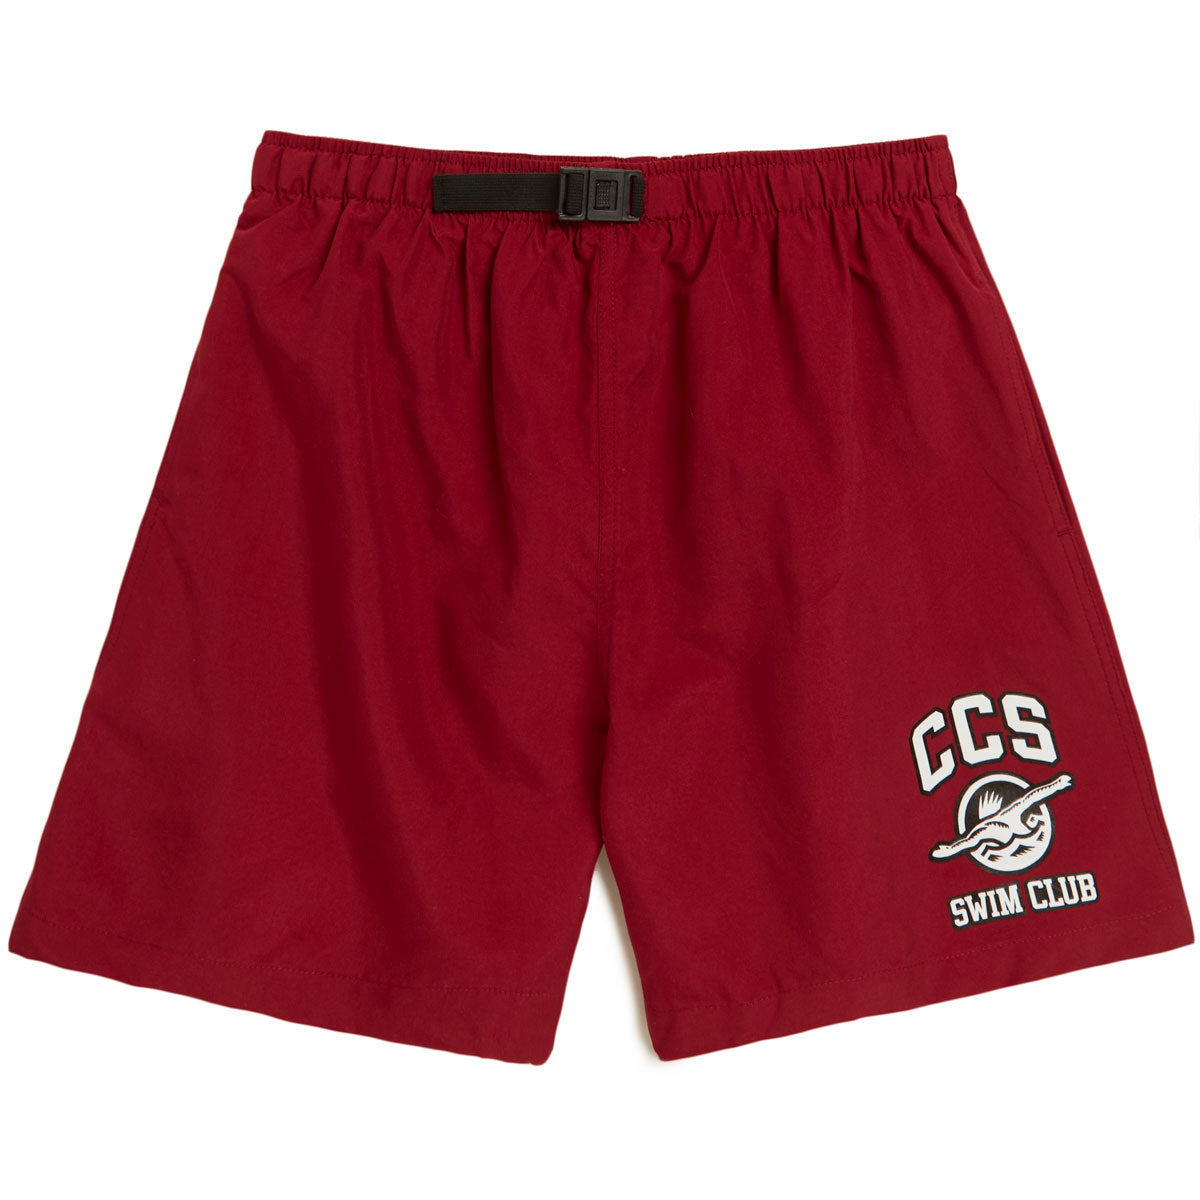 CCS Swim Club Hybrid Shorts - Maroon image 1